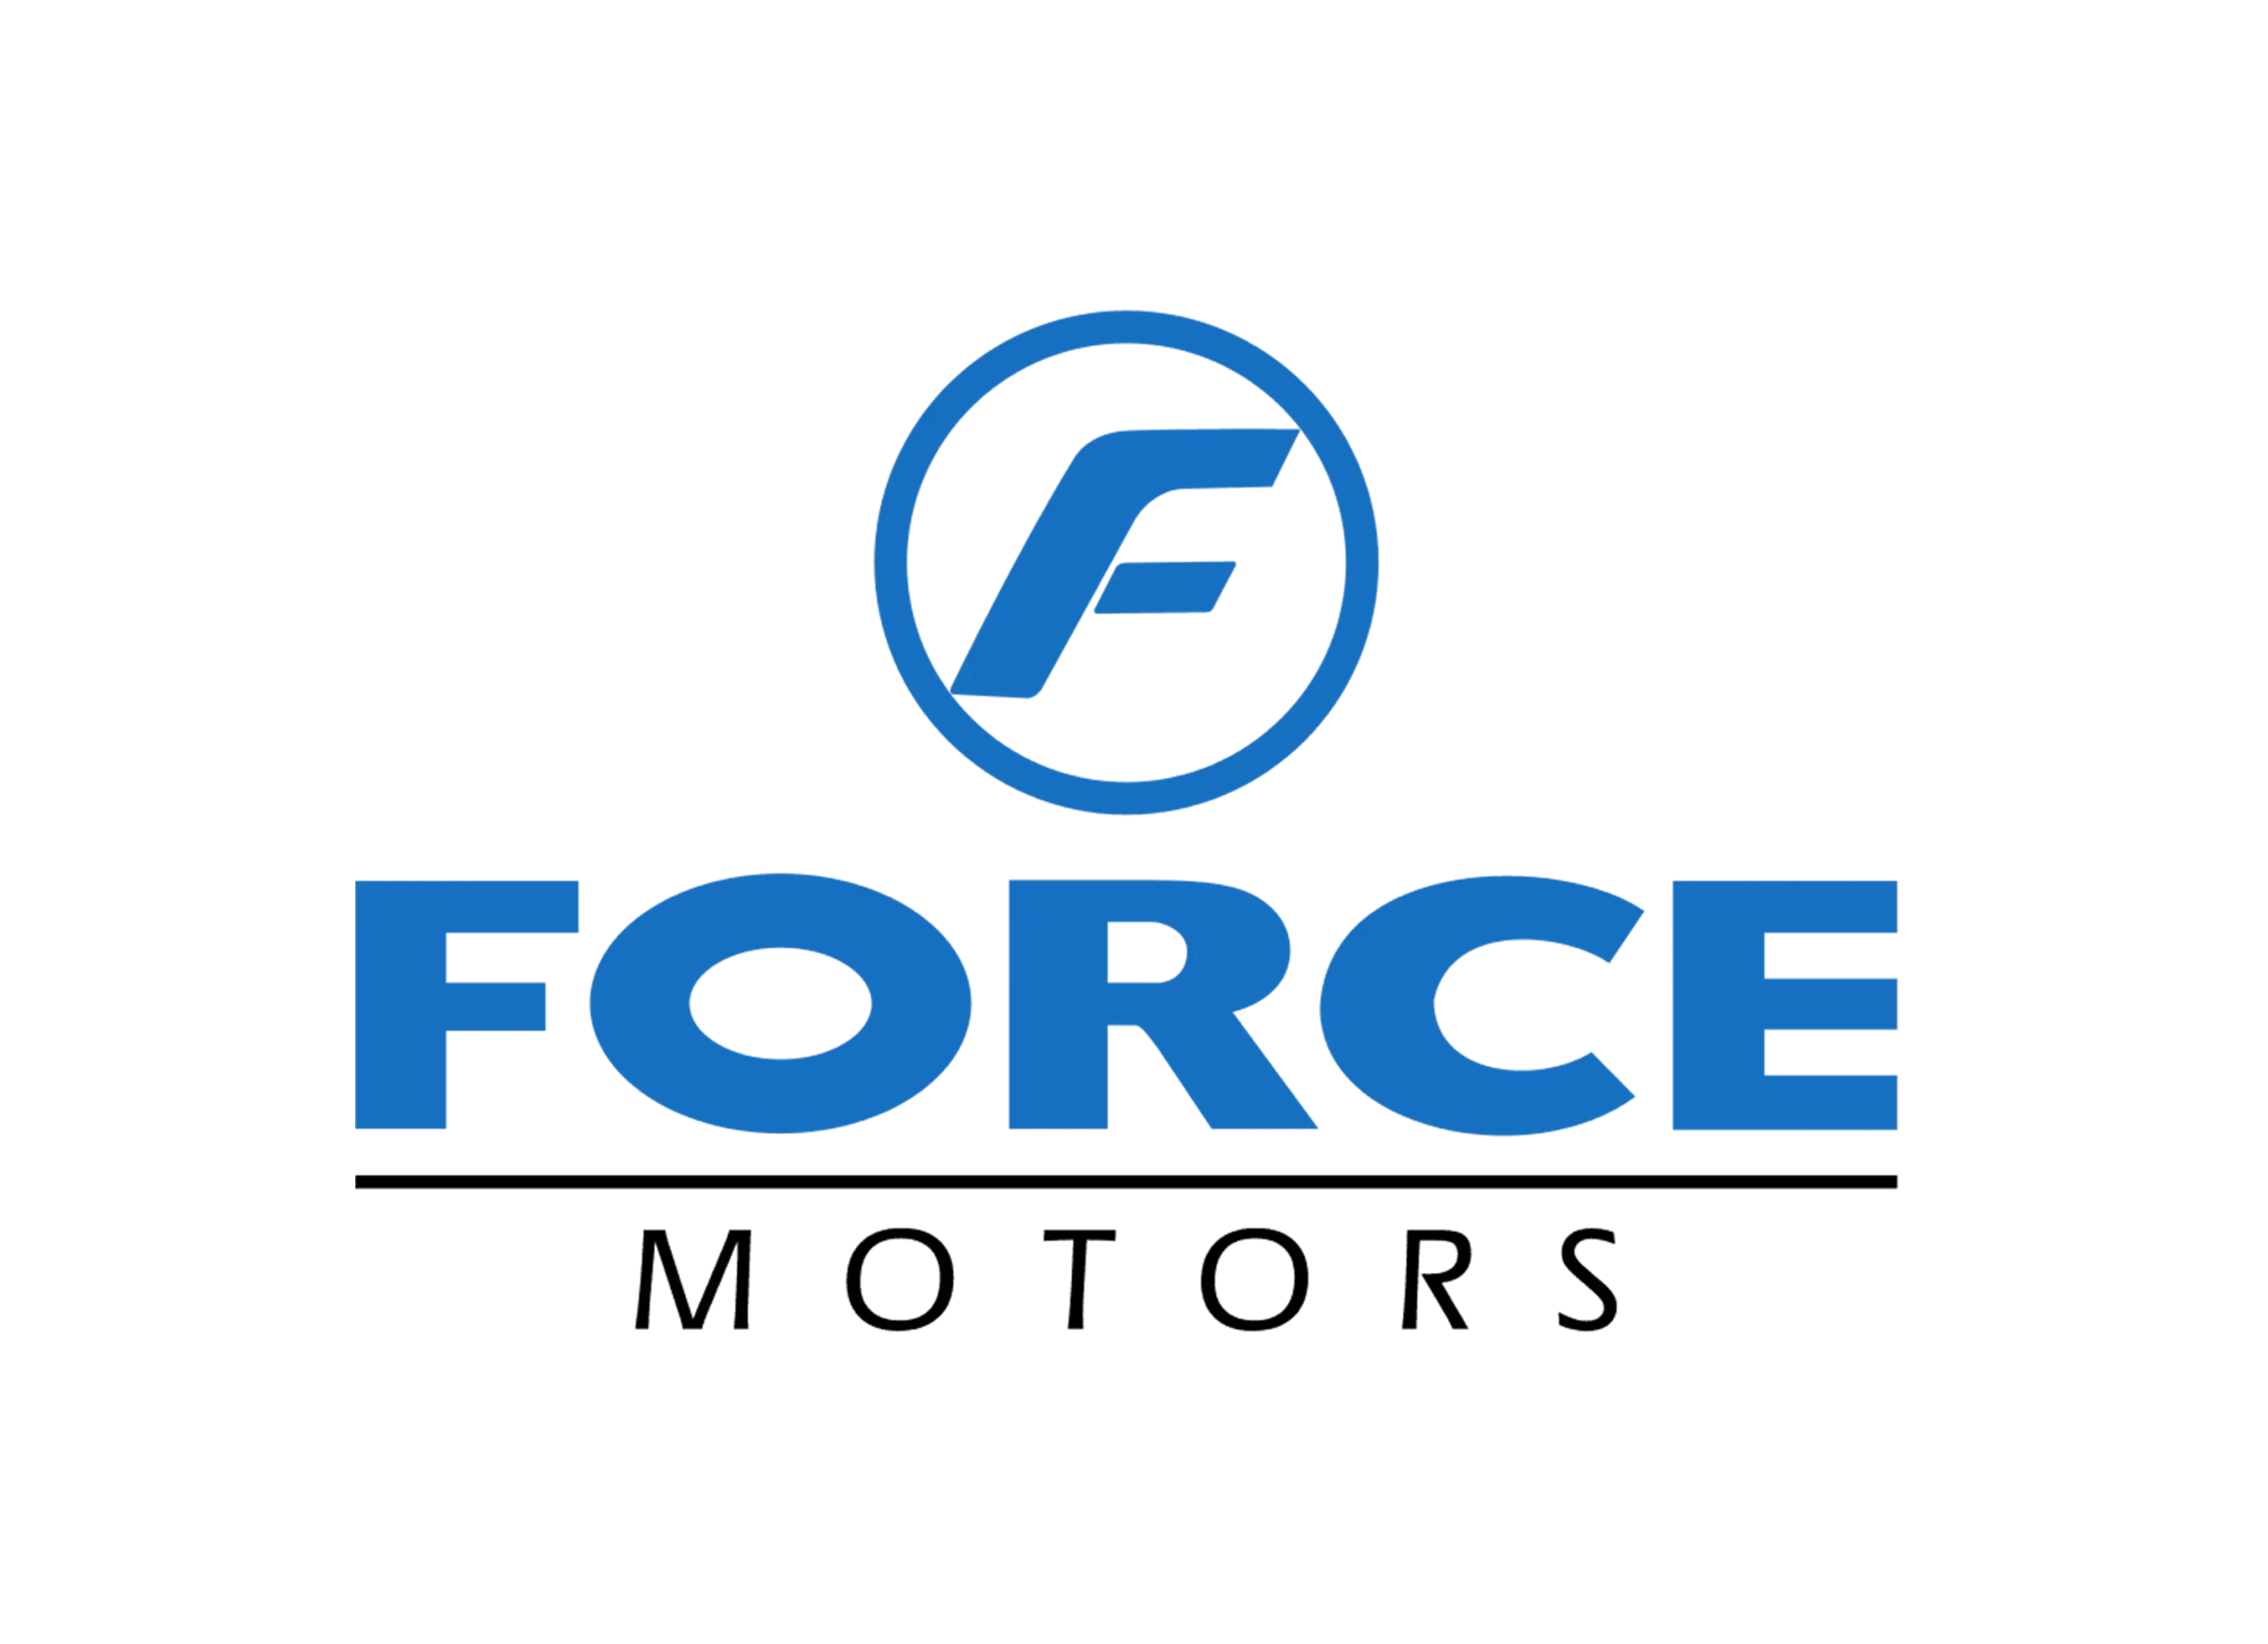 Force logo 2005-present